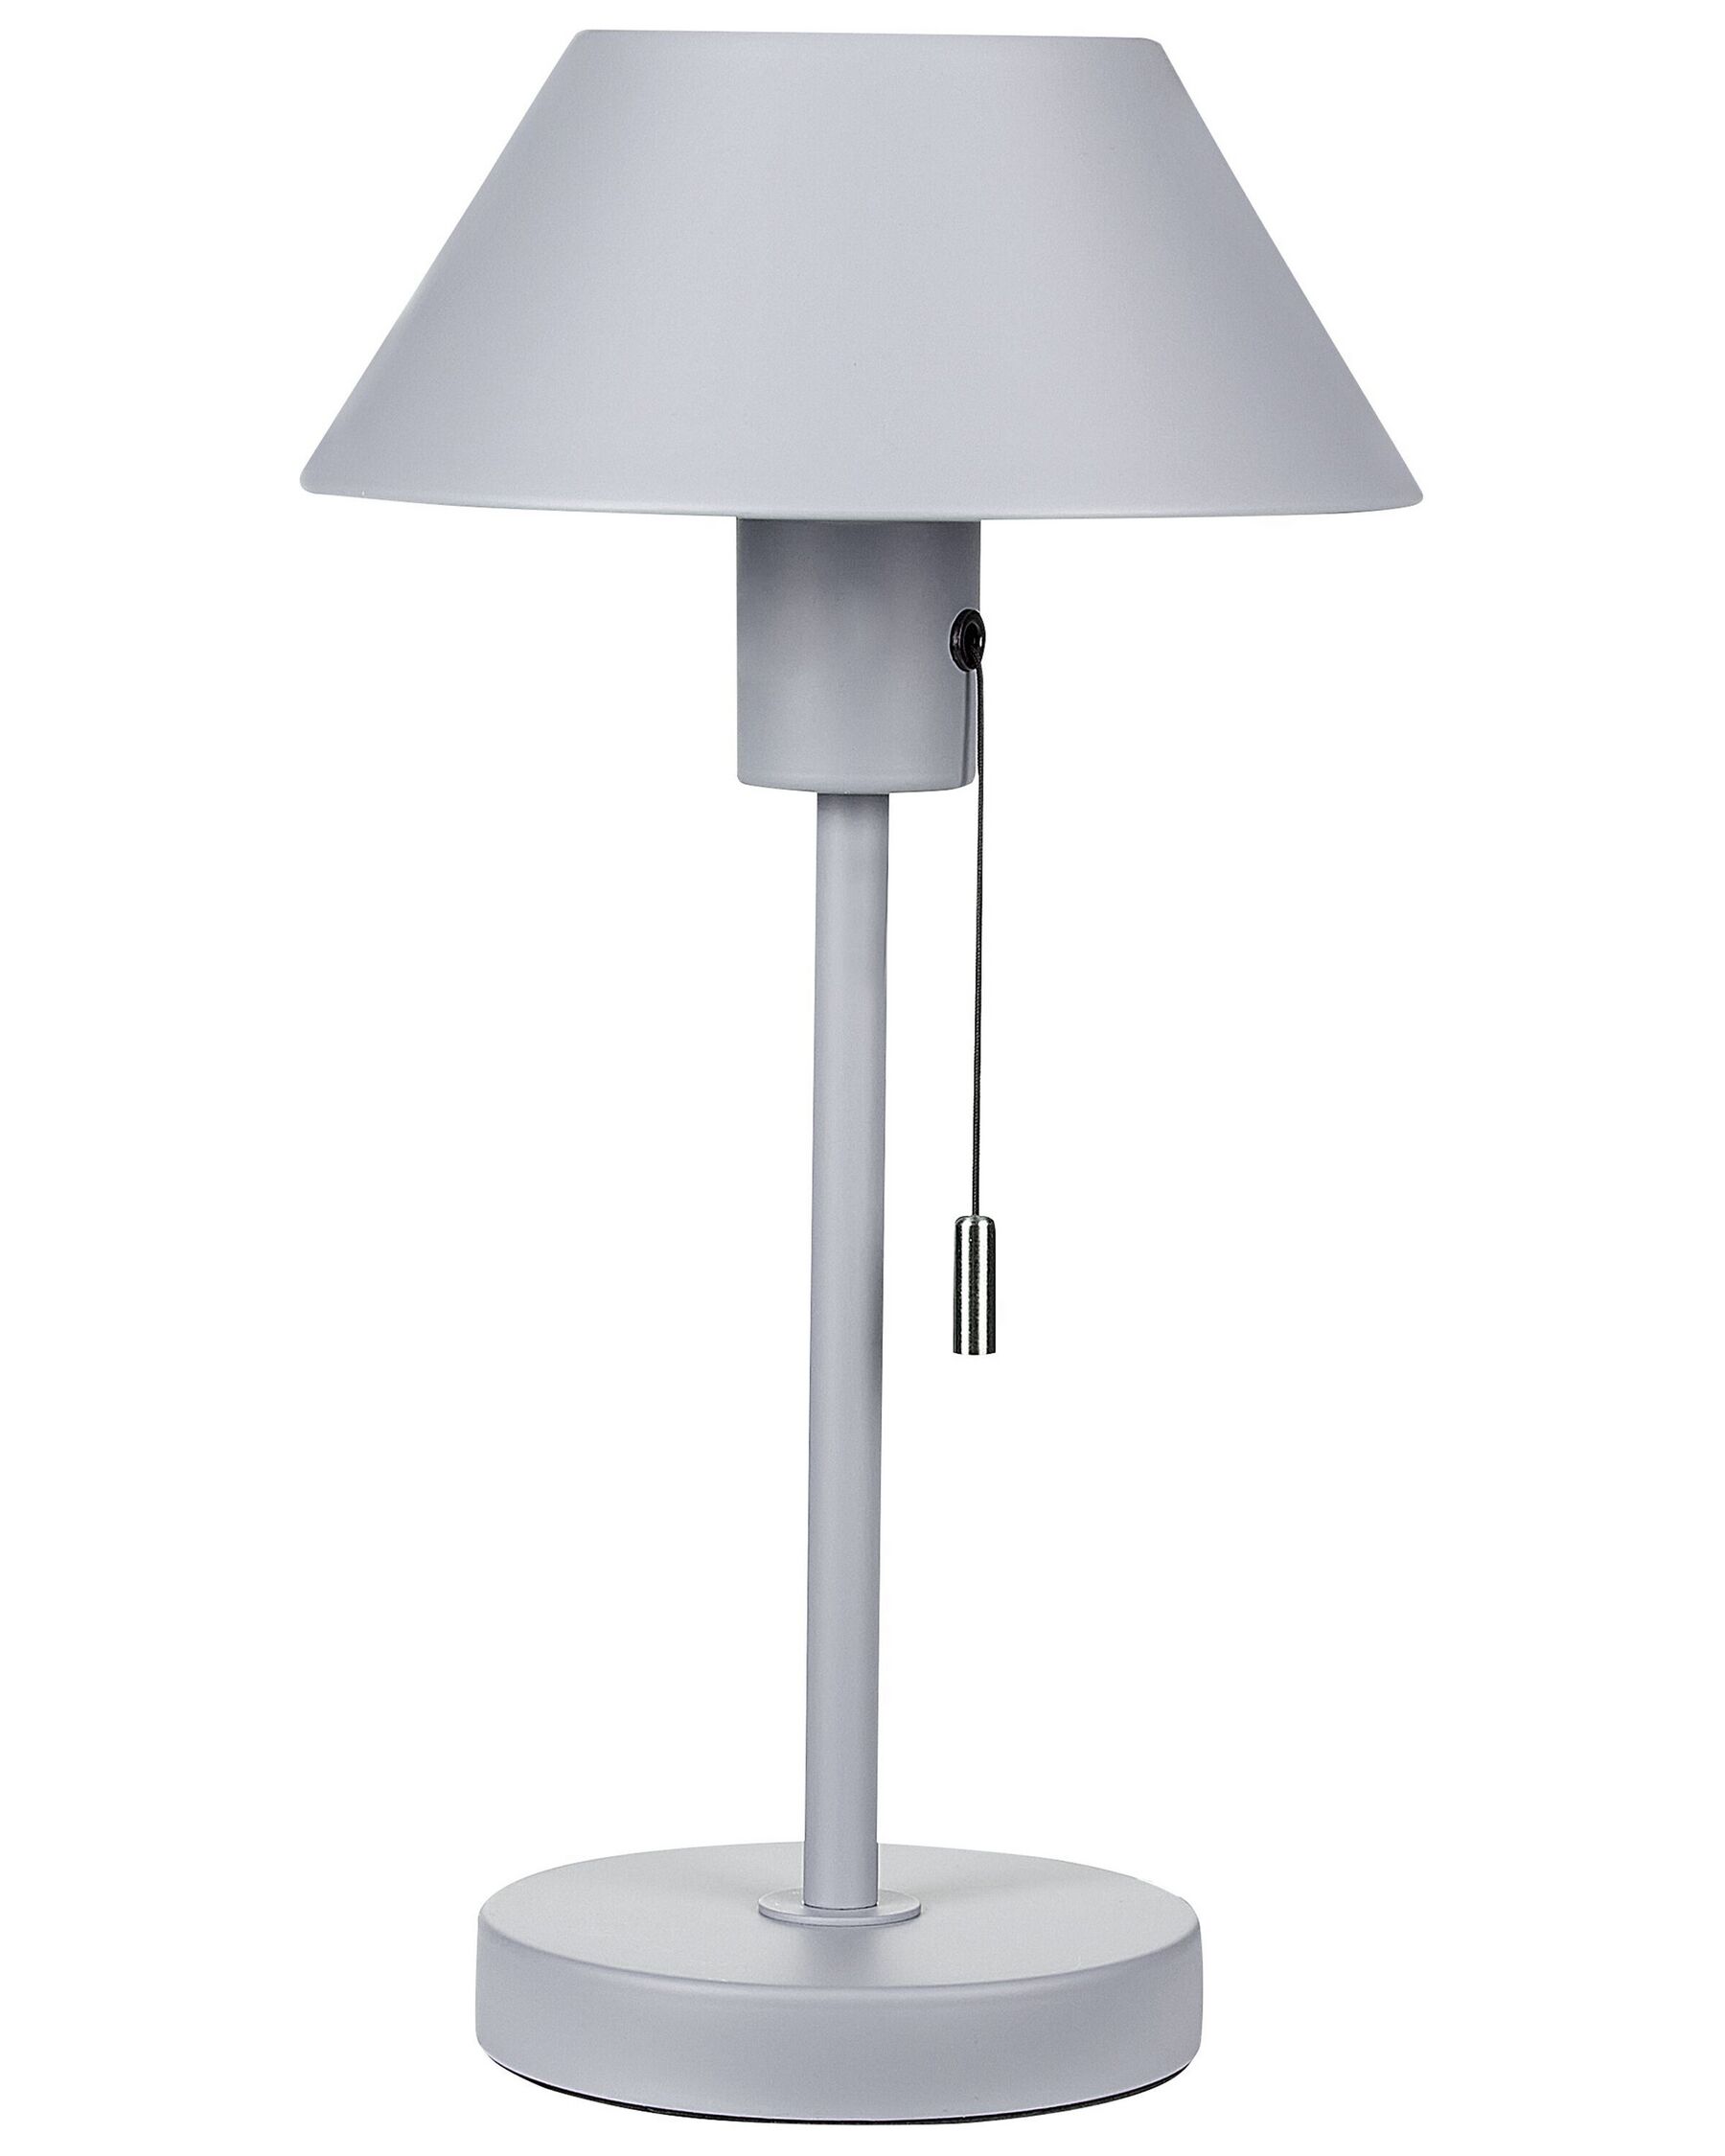 Lampada da tavolo metallo grigio chiaro 37 cm CAPARO_851329